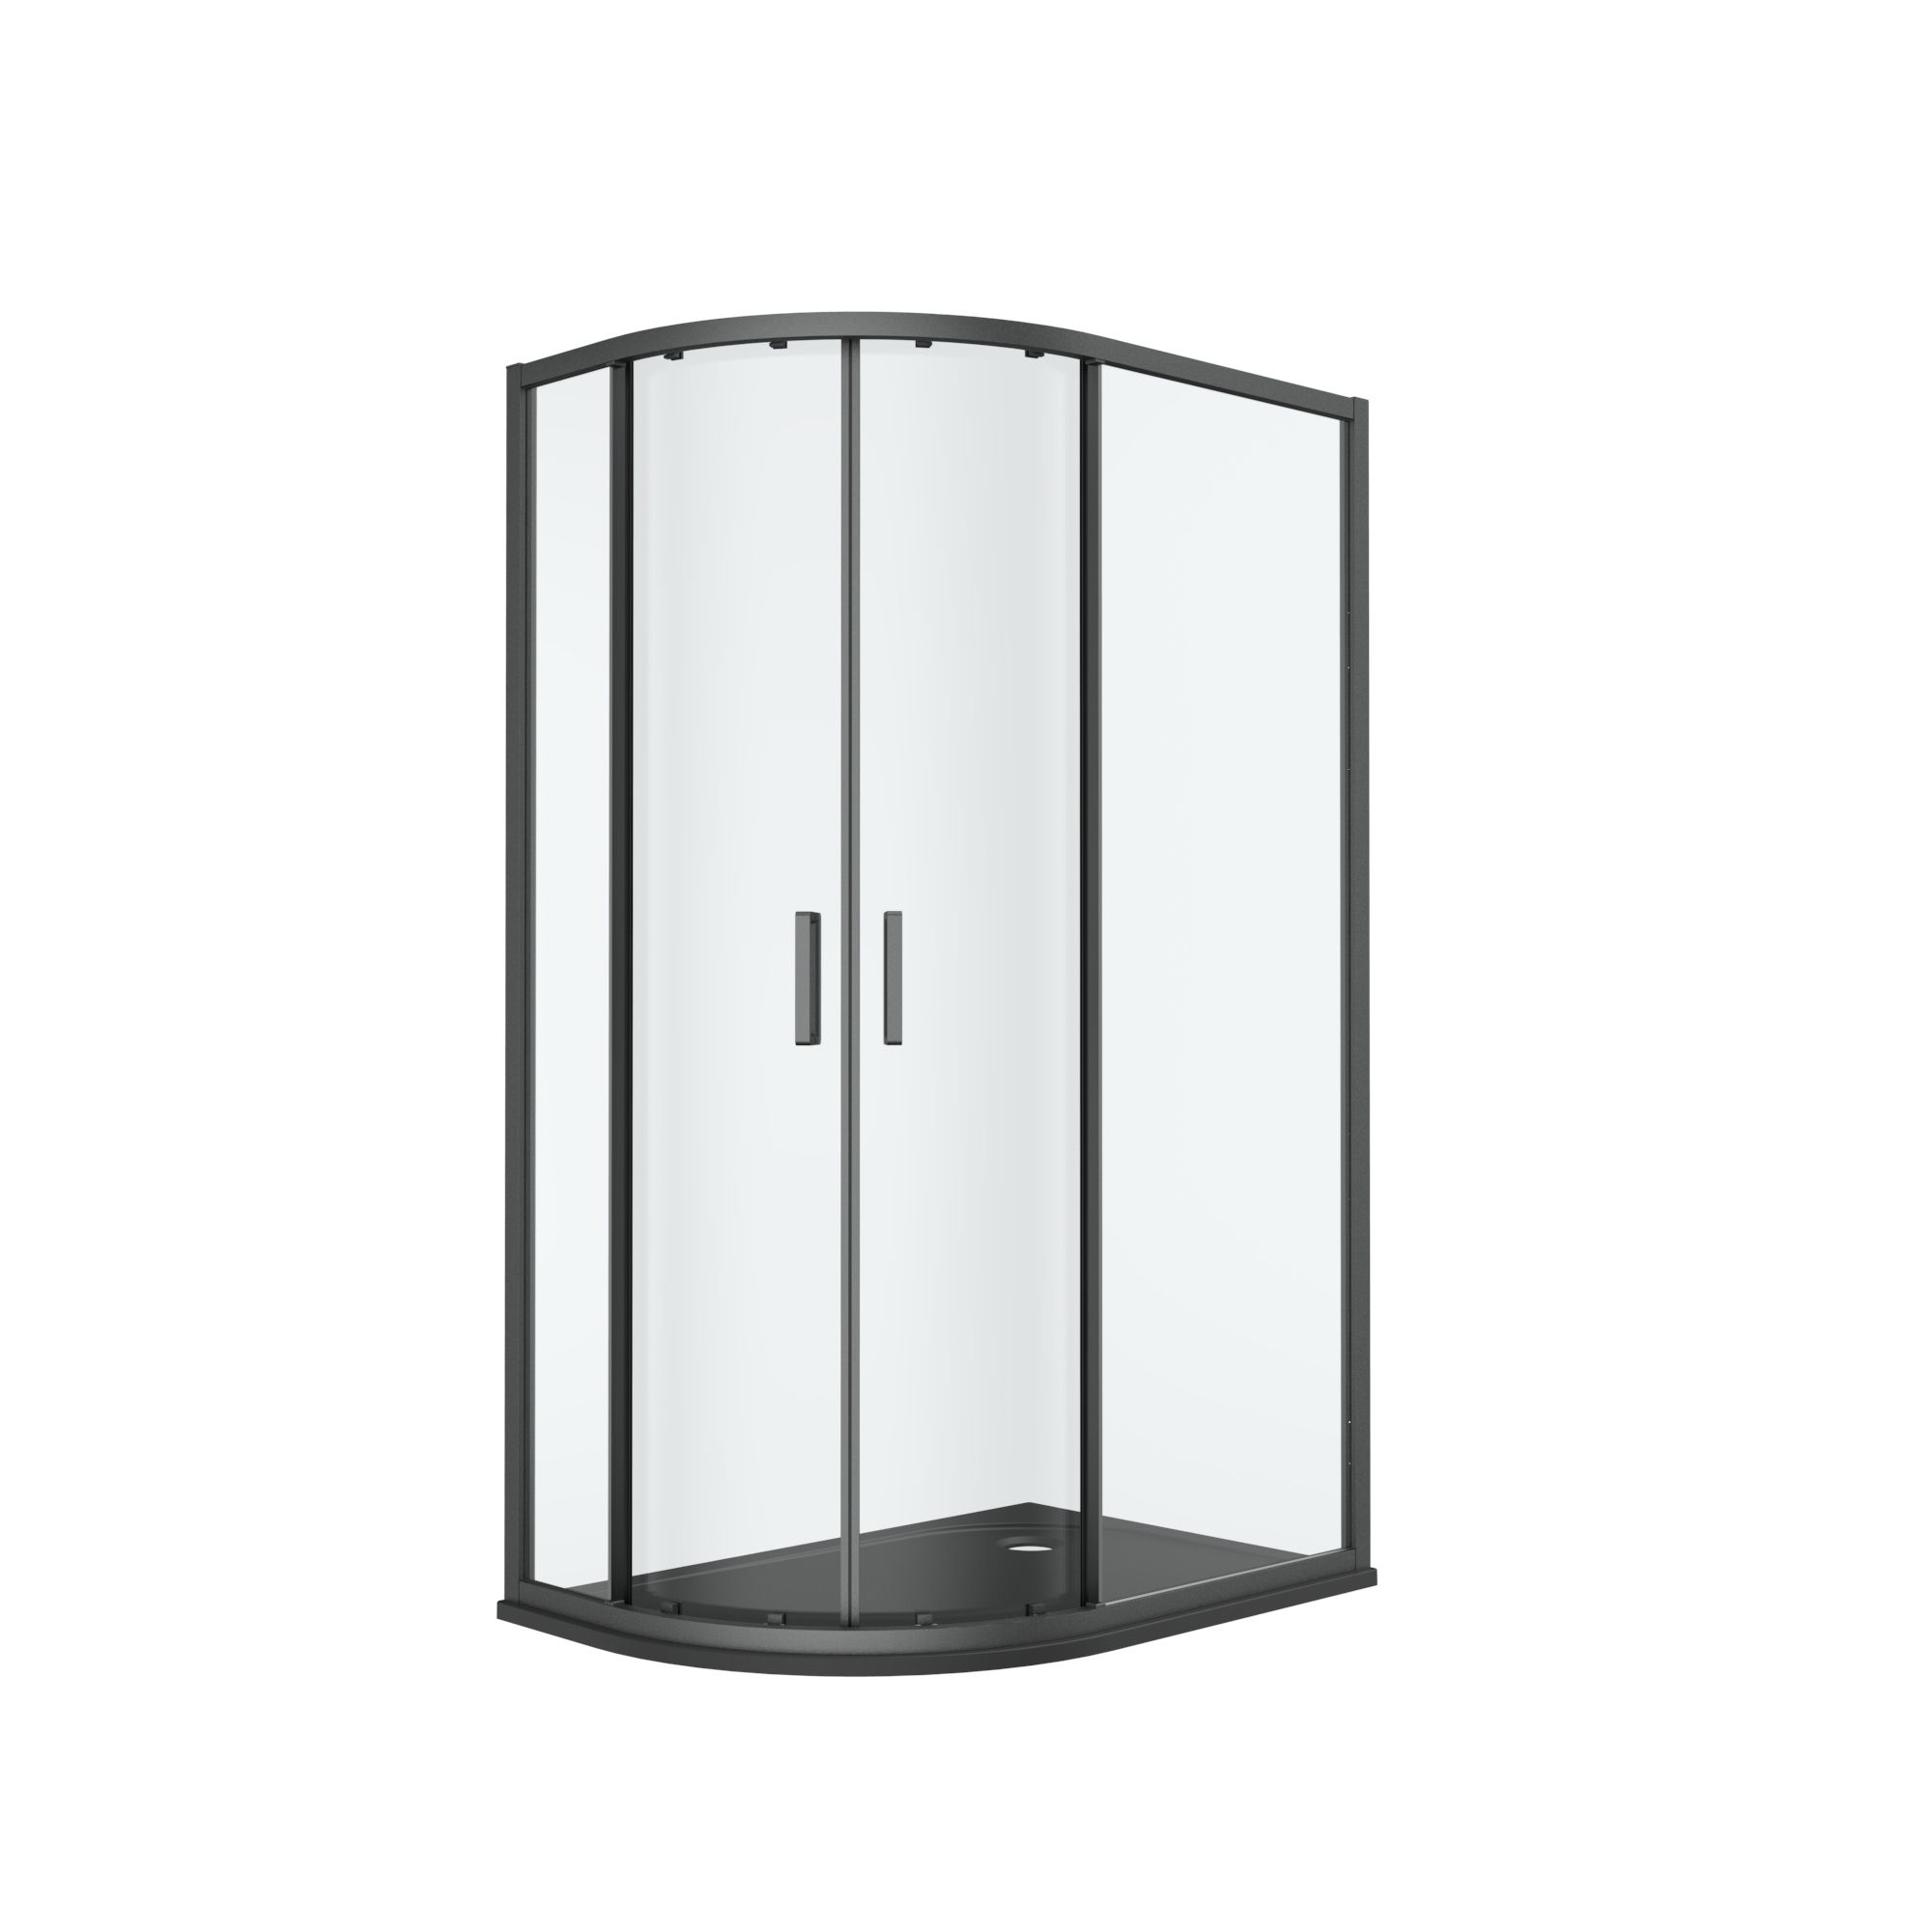 GoodHome Ledava Right-handed Offset quadrant Shower Enclosure & tray - Corner entry double sliding door (H)195cm (W)80cm (D)120cm